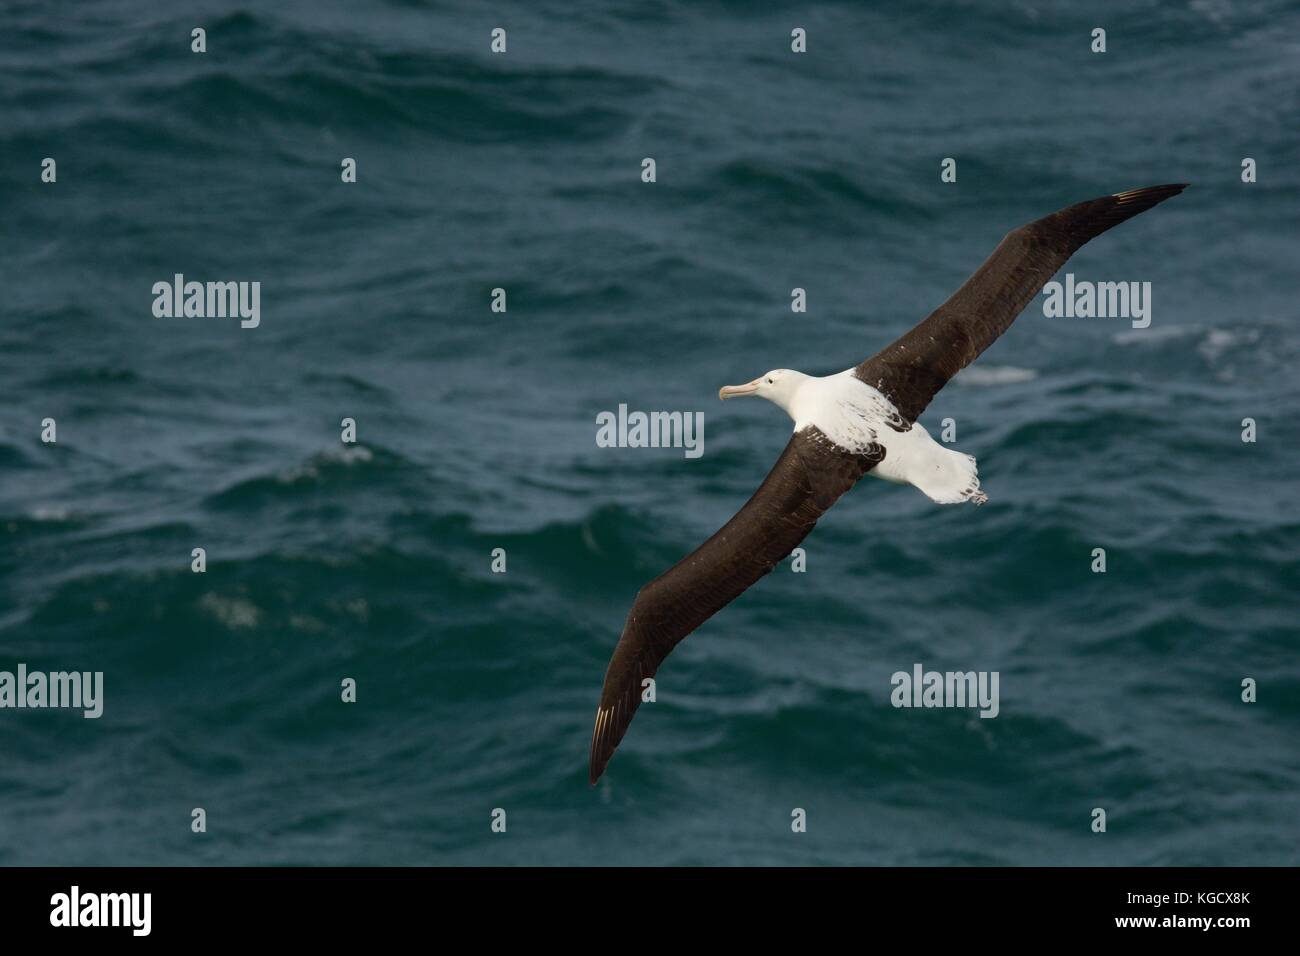 Diomedea sanfordi - Northern Royal Albatros flying above the sea in New Zealand near Otago peninsula, South Island Stock Photo